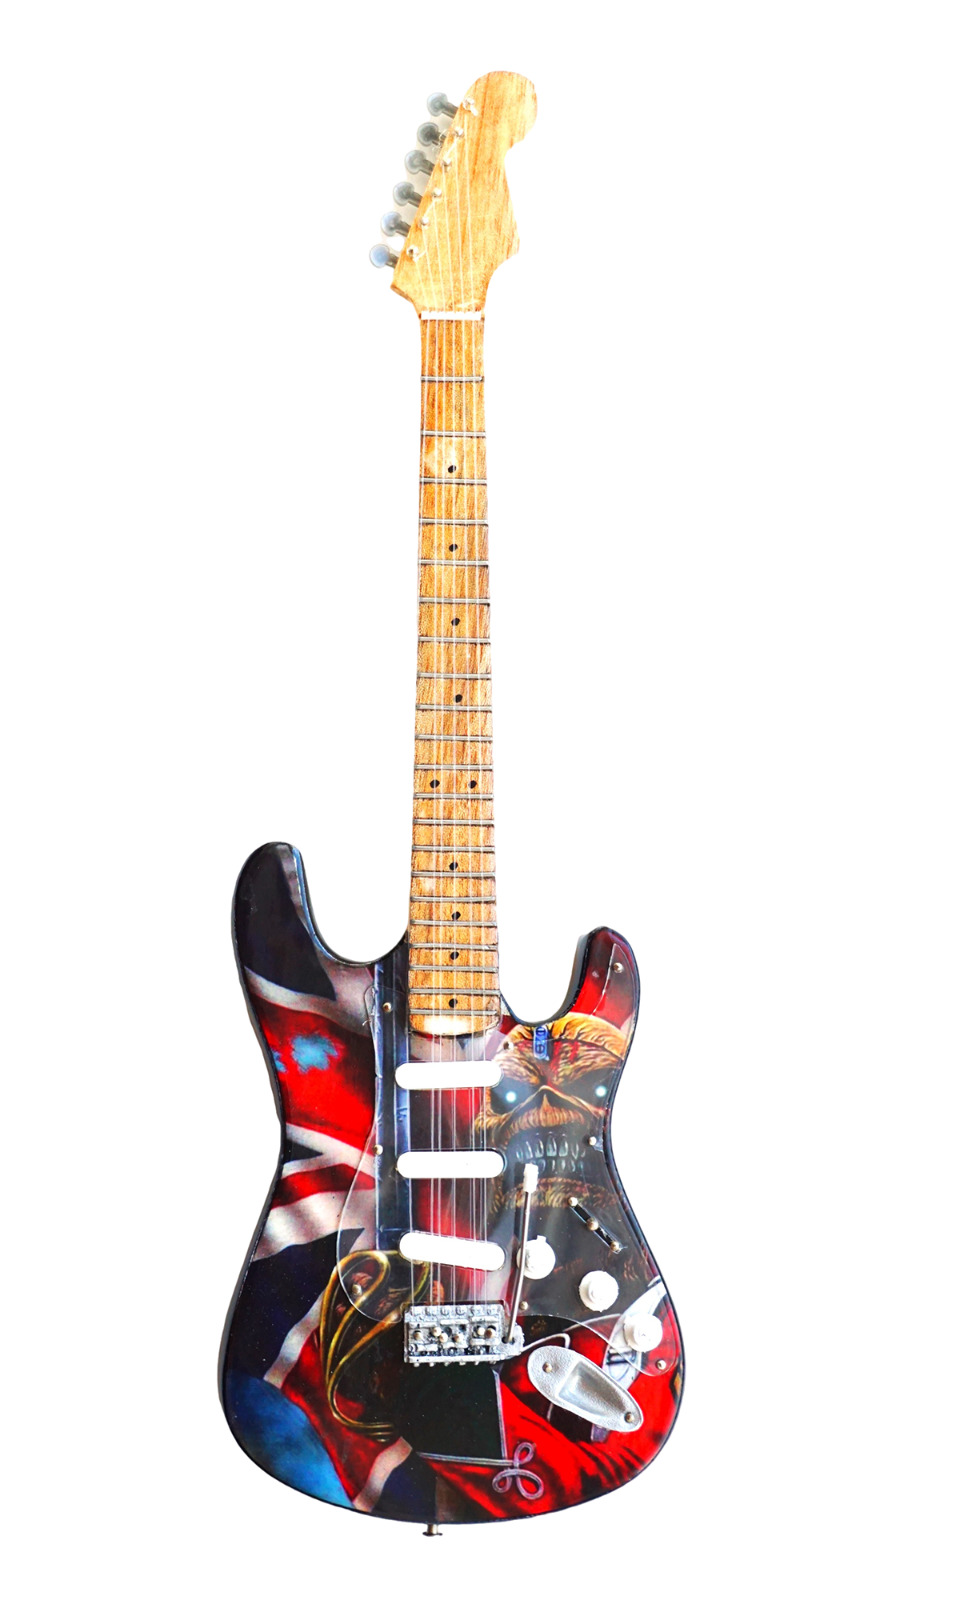 Wooden Miniature Guitar Replica Iron Maiden Tribute